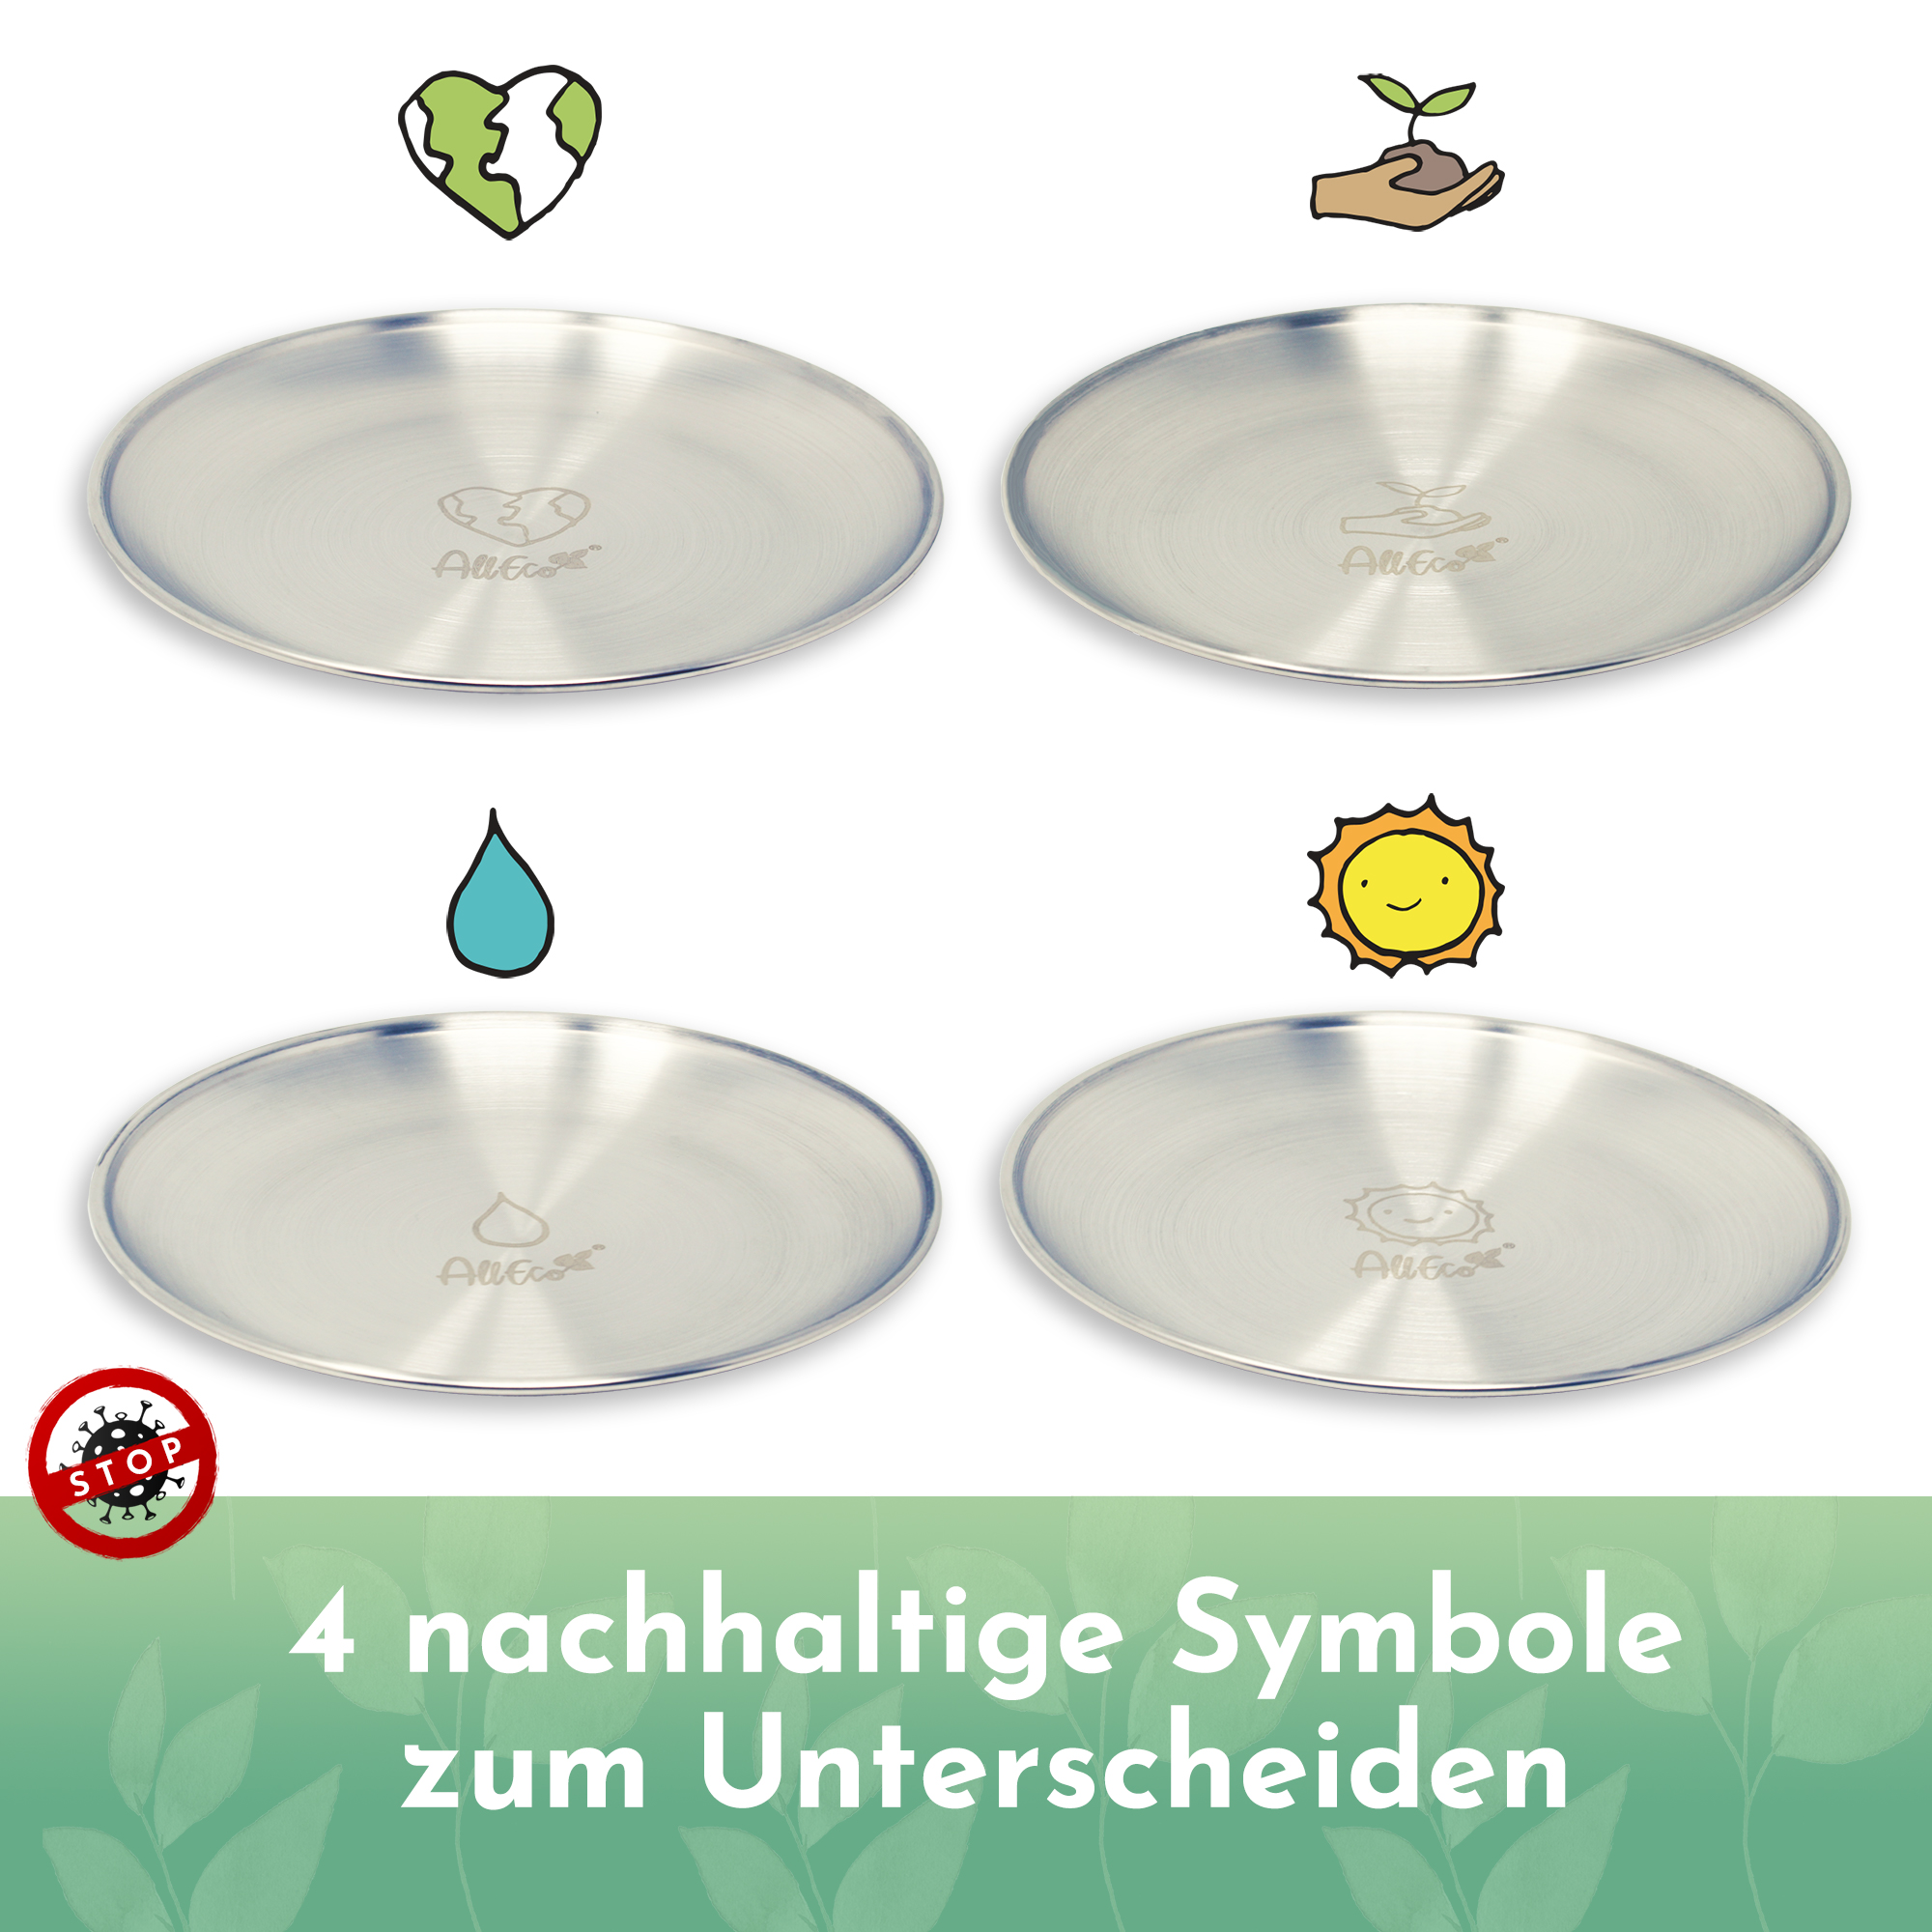 https://all-eco.eu/wp-content/uploads/2021/06/AllEco-Edelstahl-Teller-4-nachhaltige-Symbole.jpg